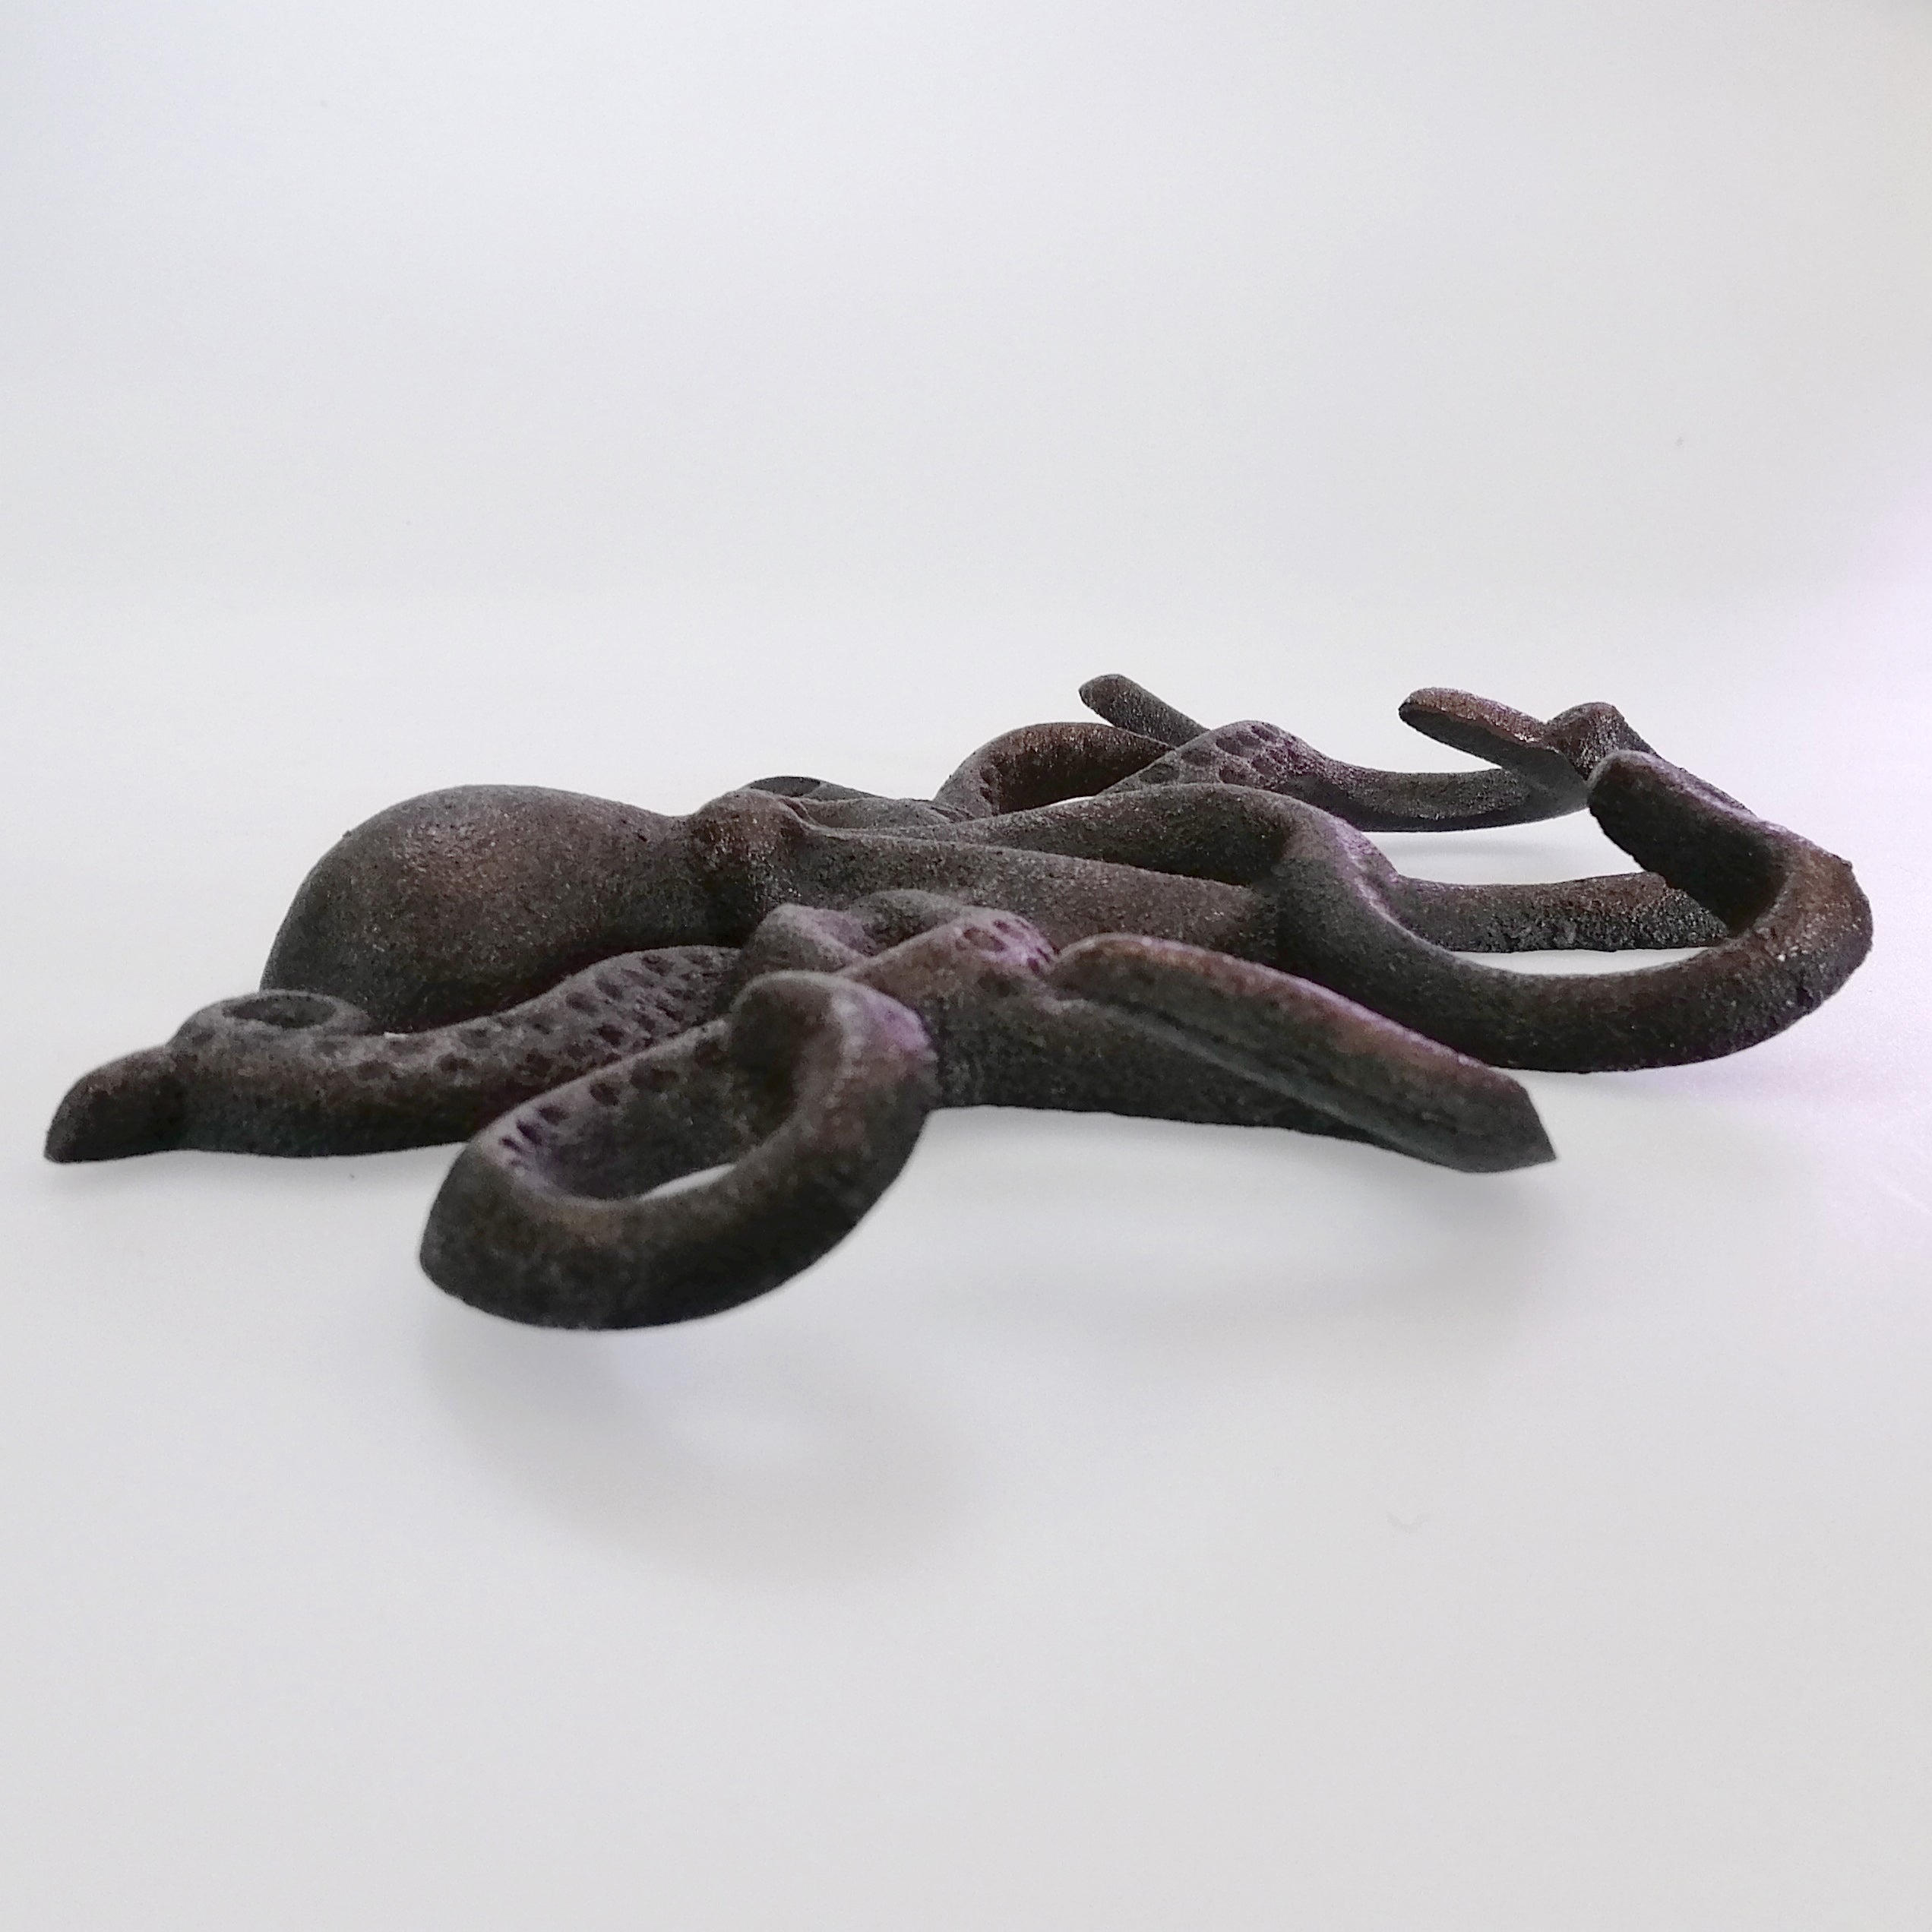 Cast Iron Wall Hooks - Octopus